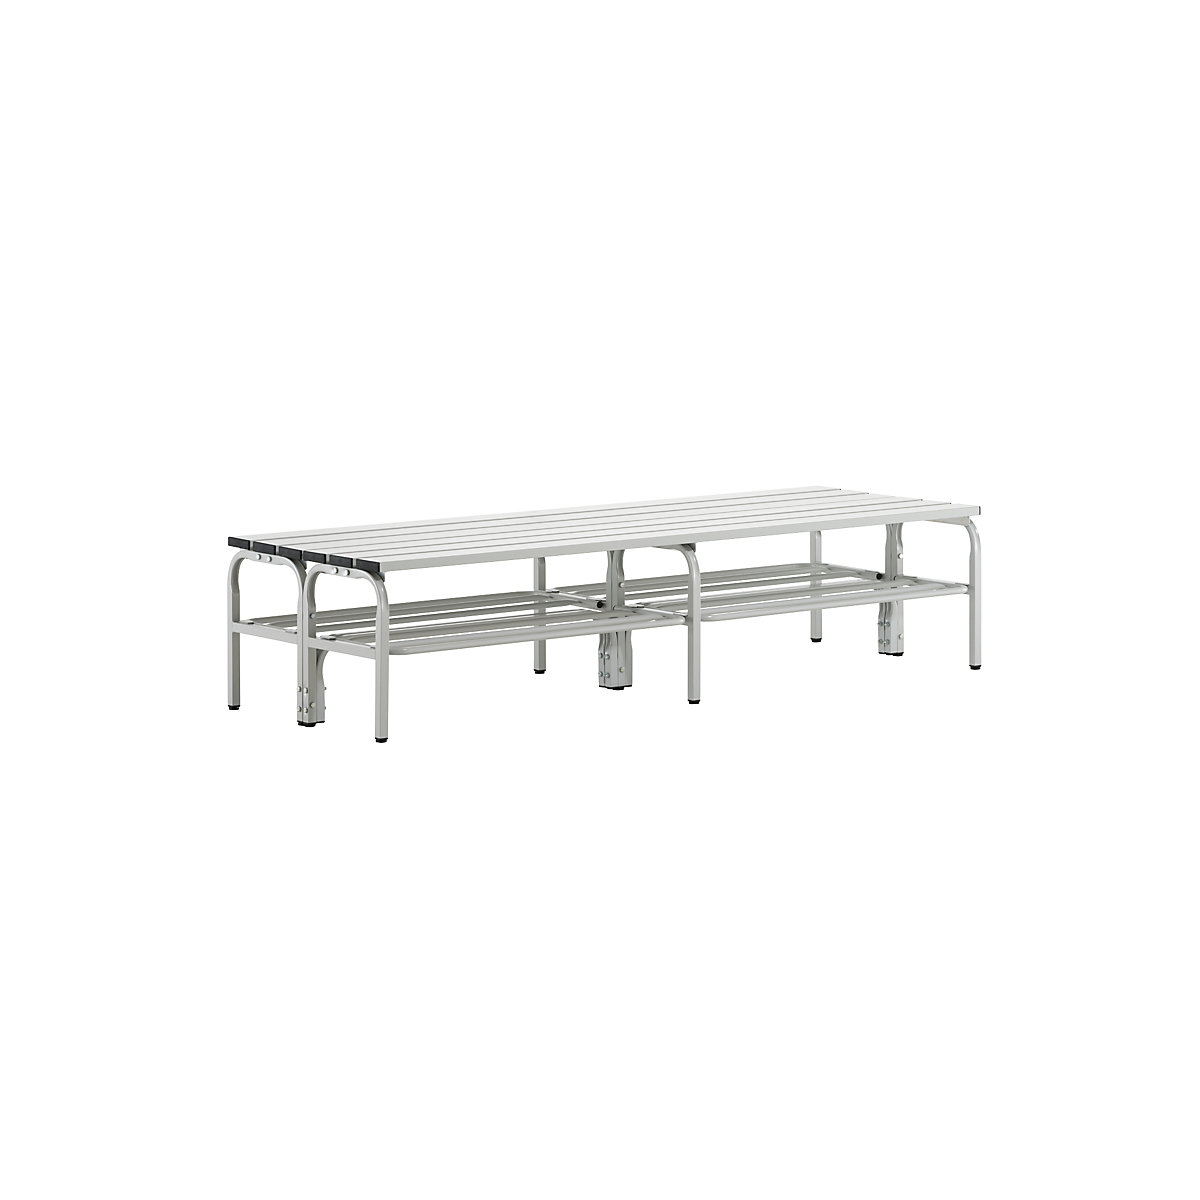 Cloakroom bench, double sided – Sypro, aluminium slats, light grey, length 1500 mm, with shoe rack-1